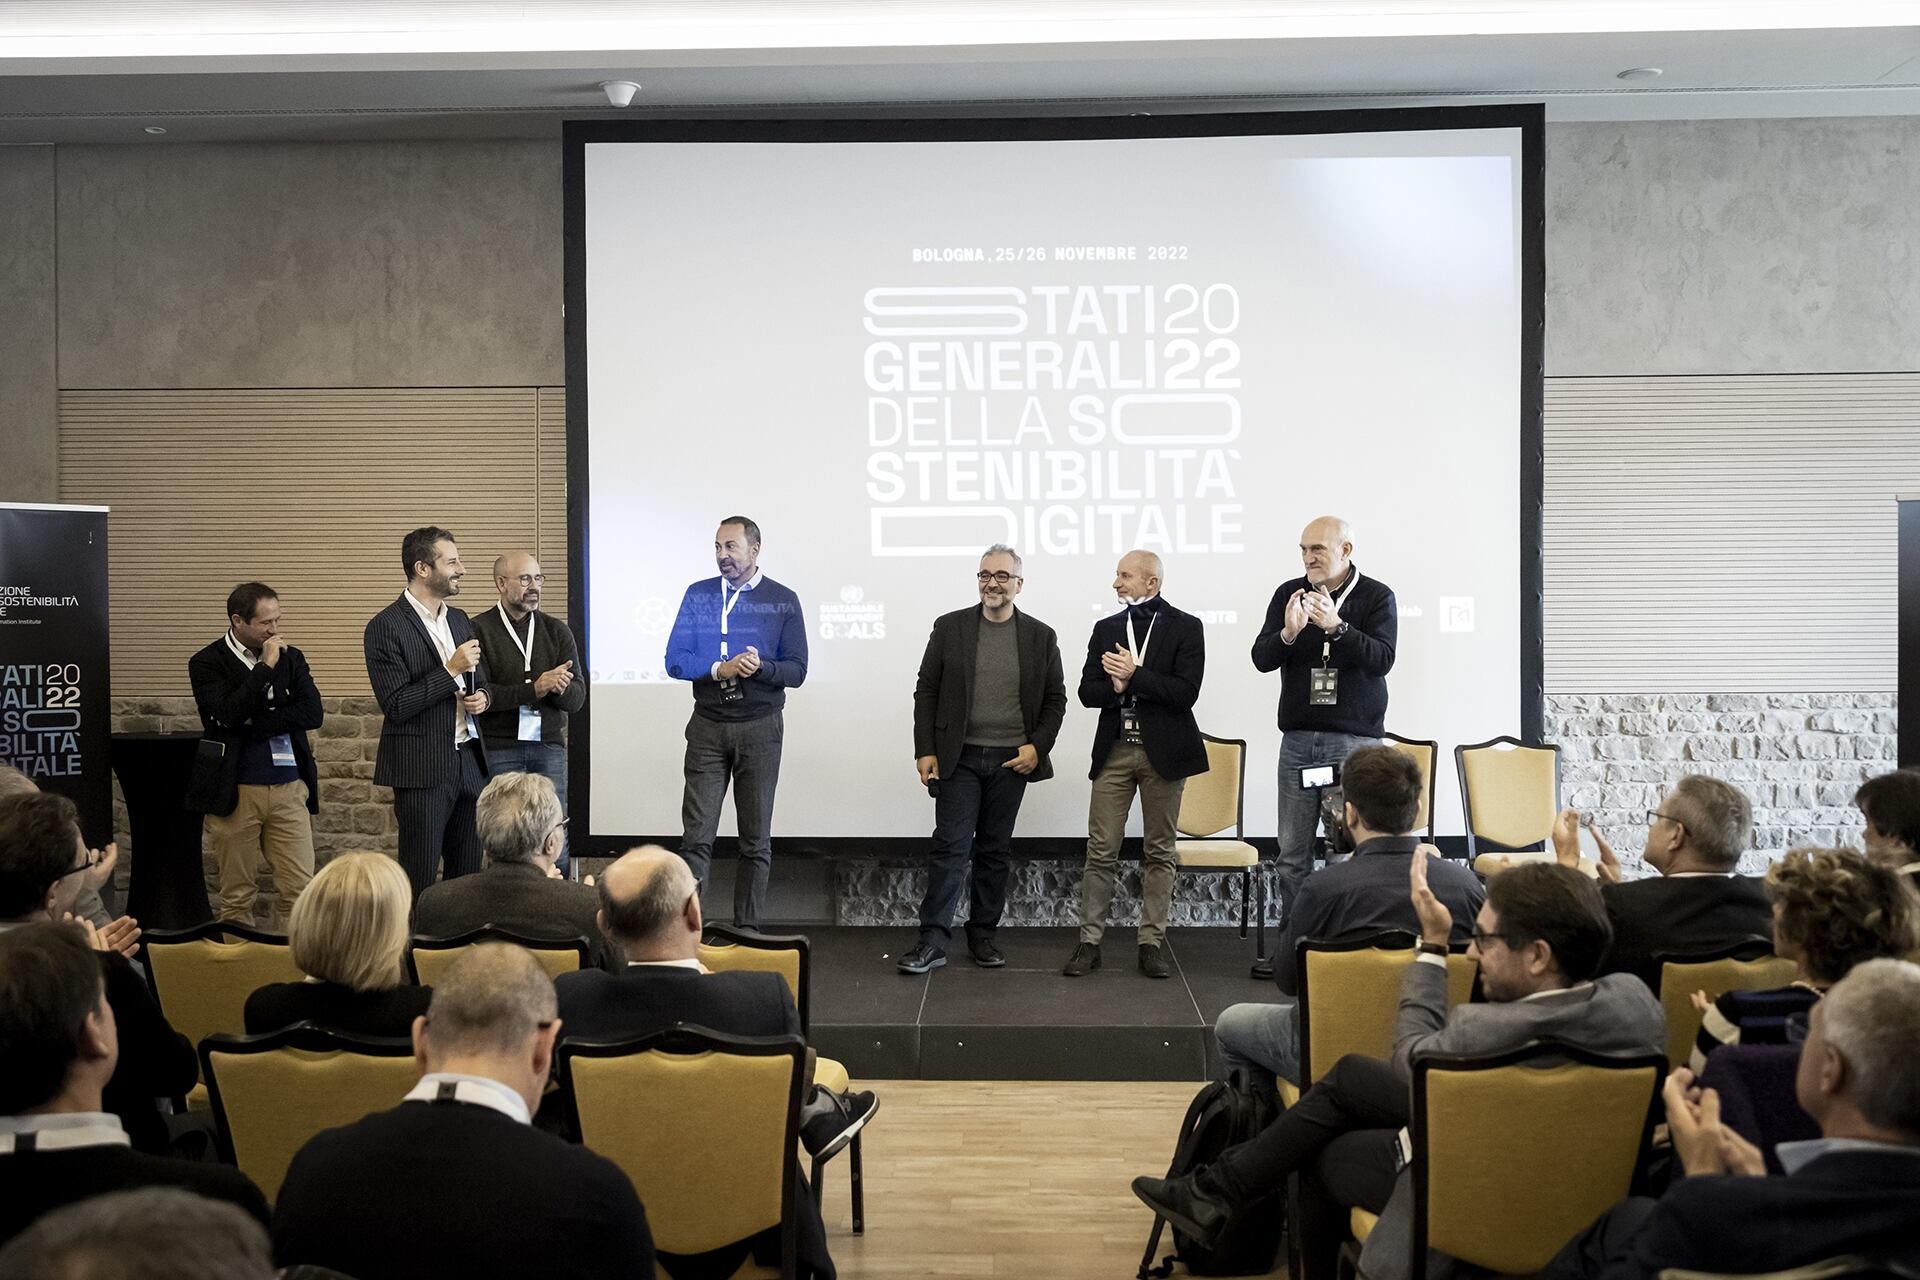 Stefano Epifani: הוועדה המארגנת של האירוע "Stati Generali della Sostenibilità Digitale", שאורגנה בבולוניה (איטליה) ב-25 וב-26 בנובמבר 2022